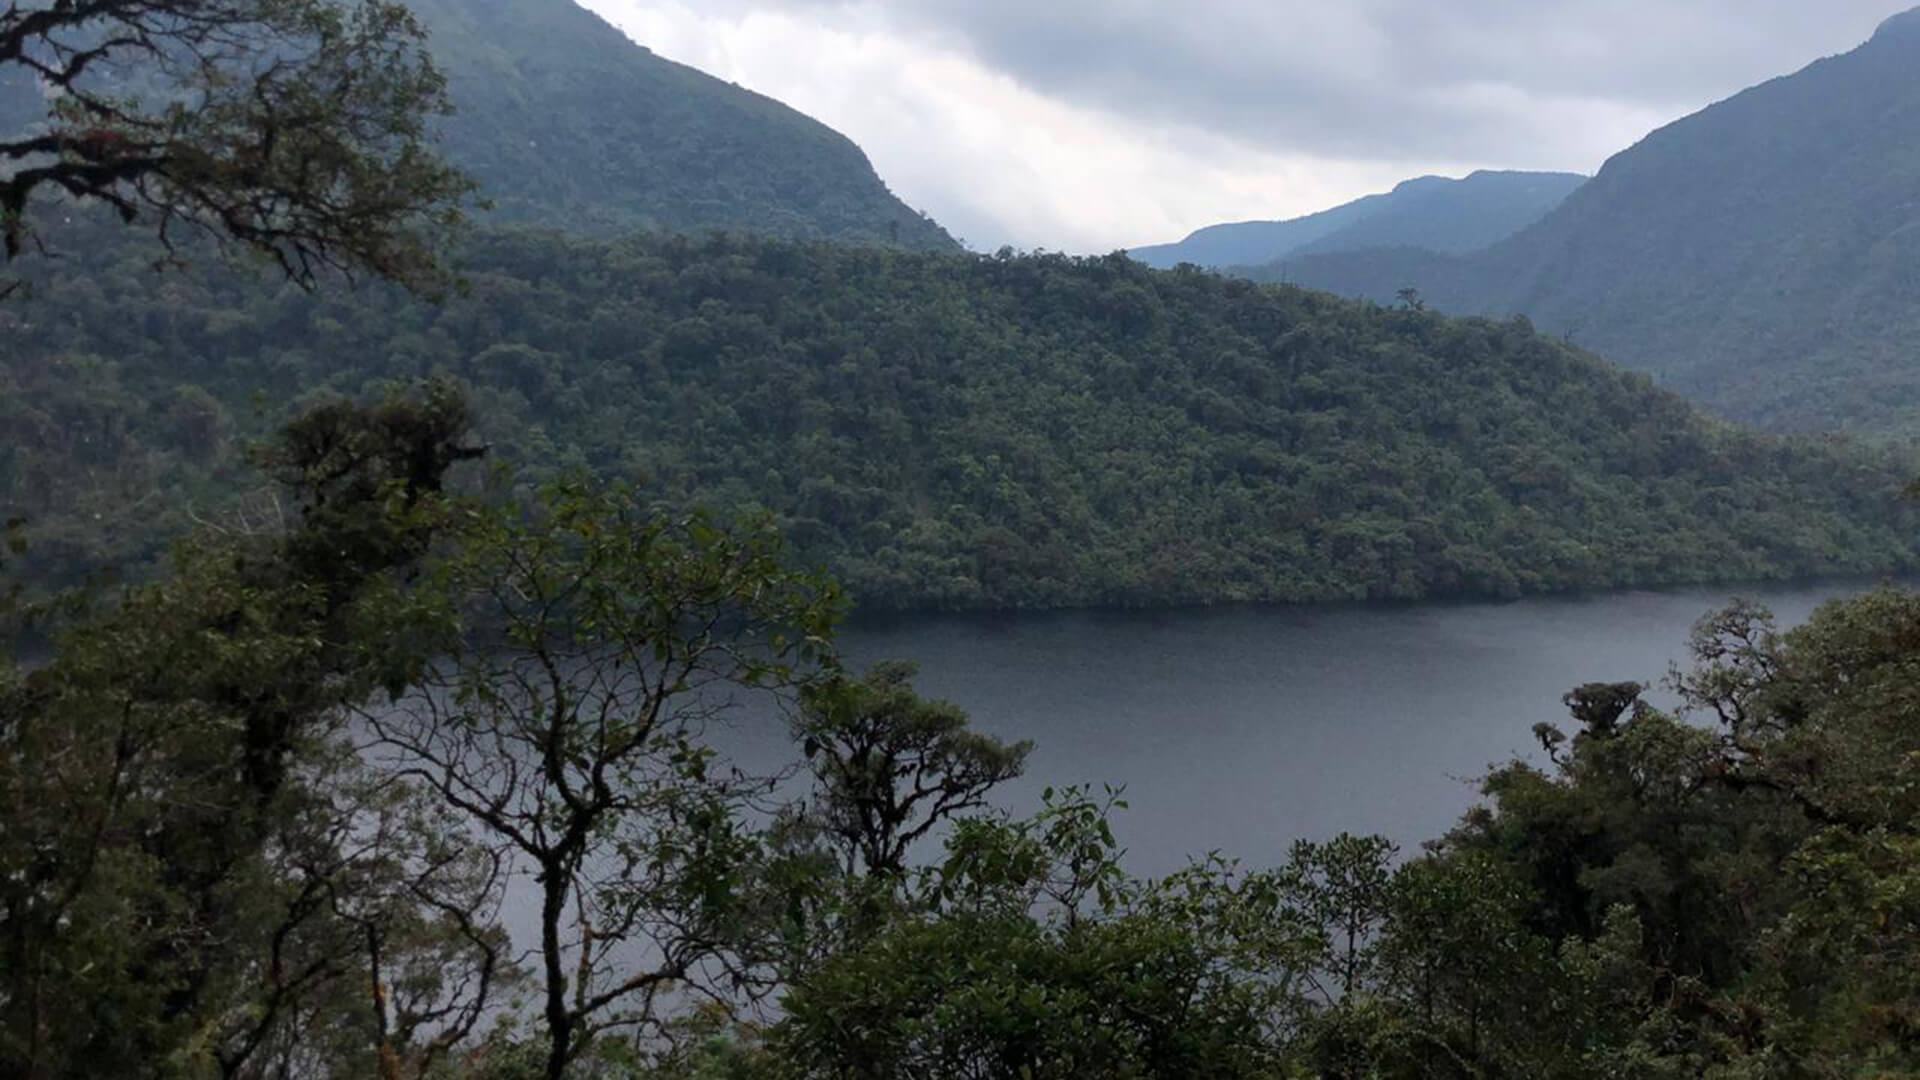 The Condor Lagoon close to Leymebamba lying peaceful between the mountains. ©️ Shawn Wroughton